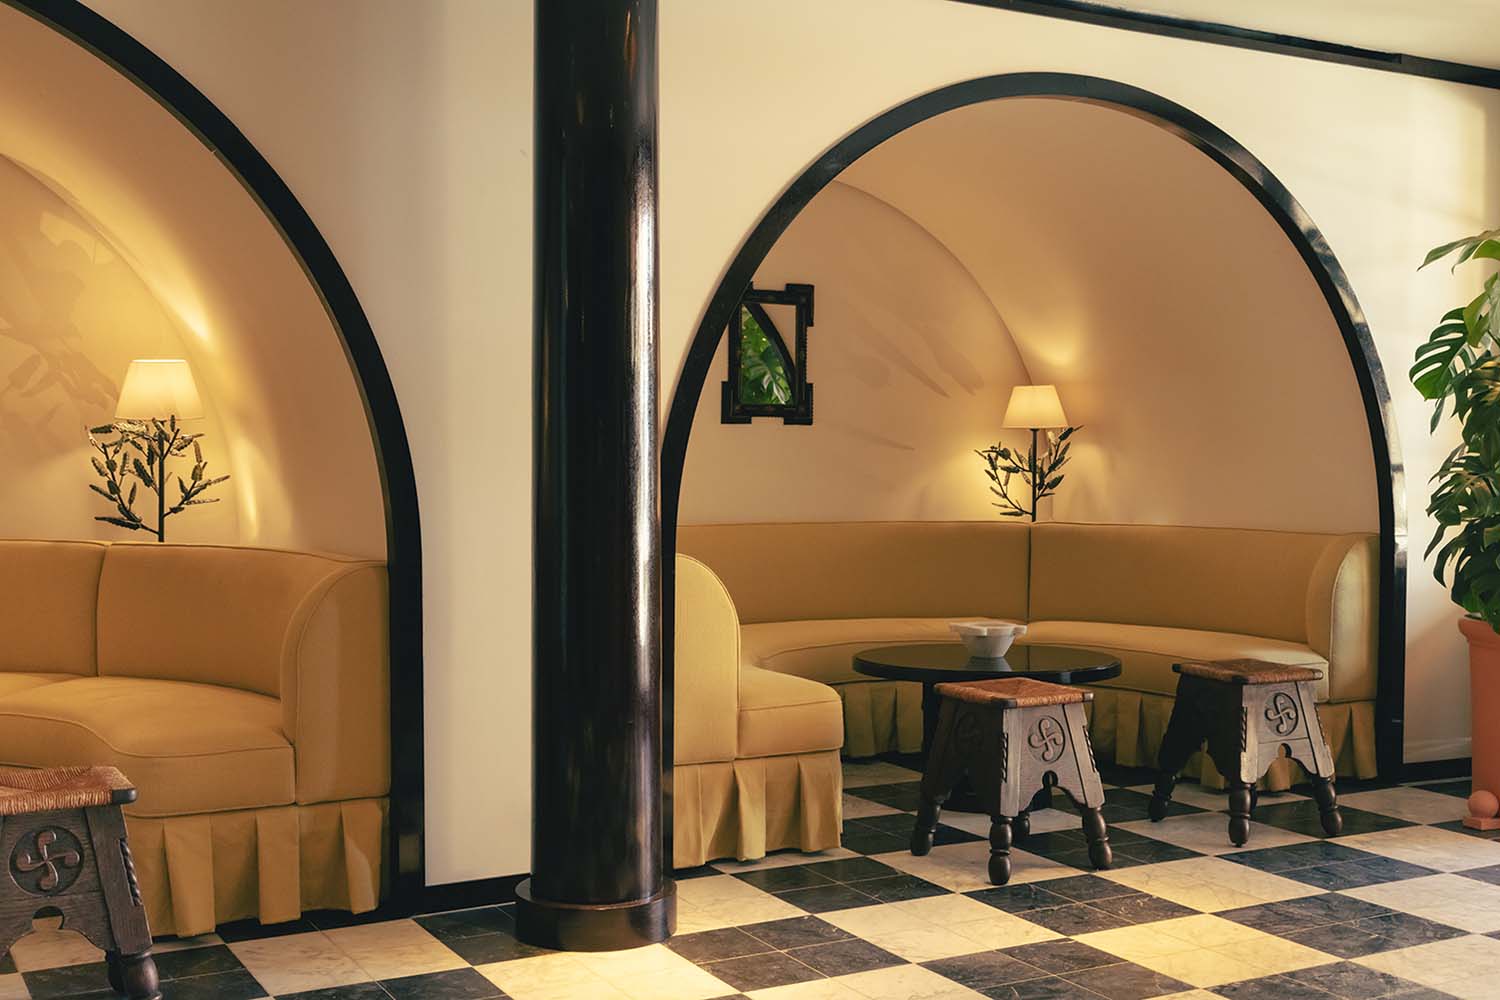 La Ponche Hotel Restaurant Saint Tropez, by Fabrizio Casiraghi